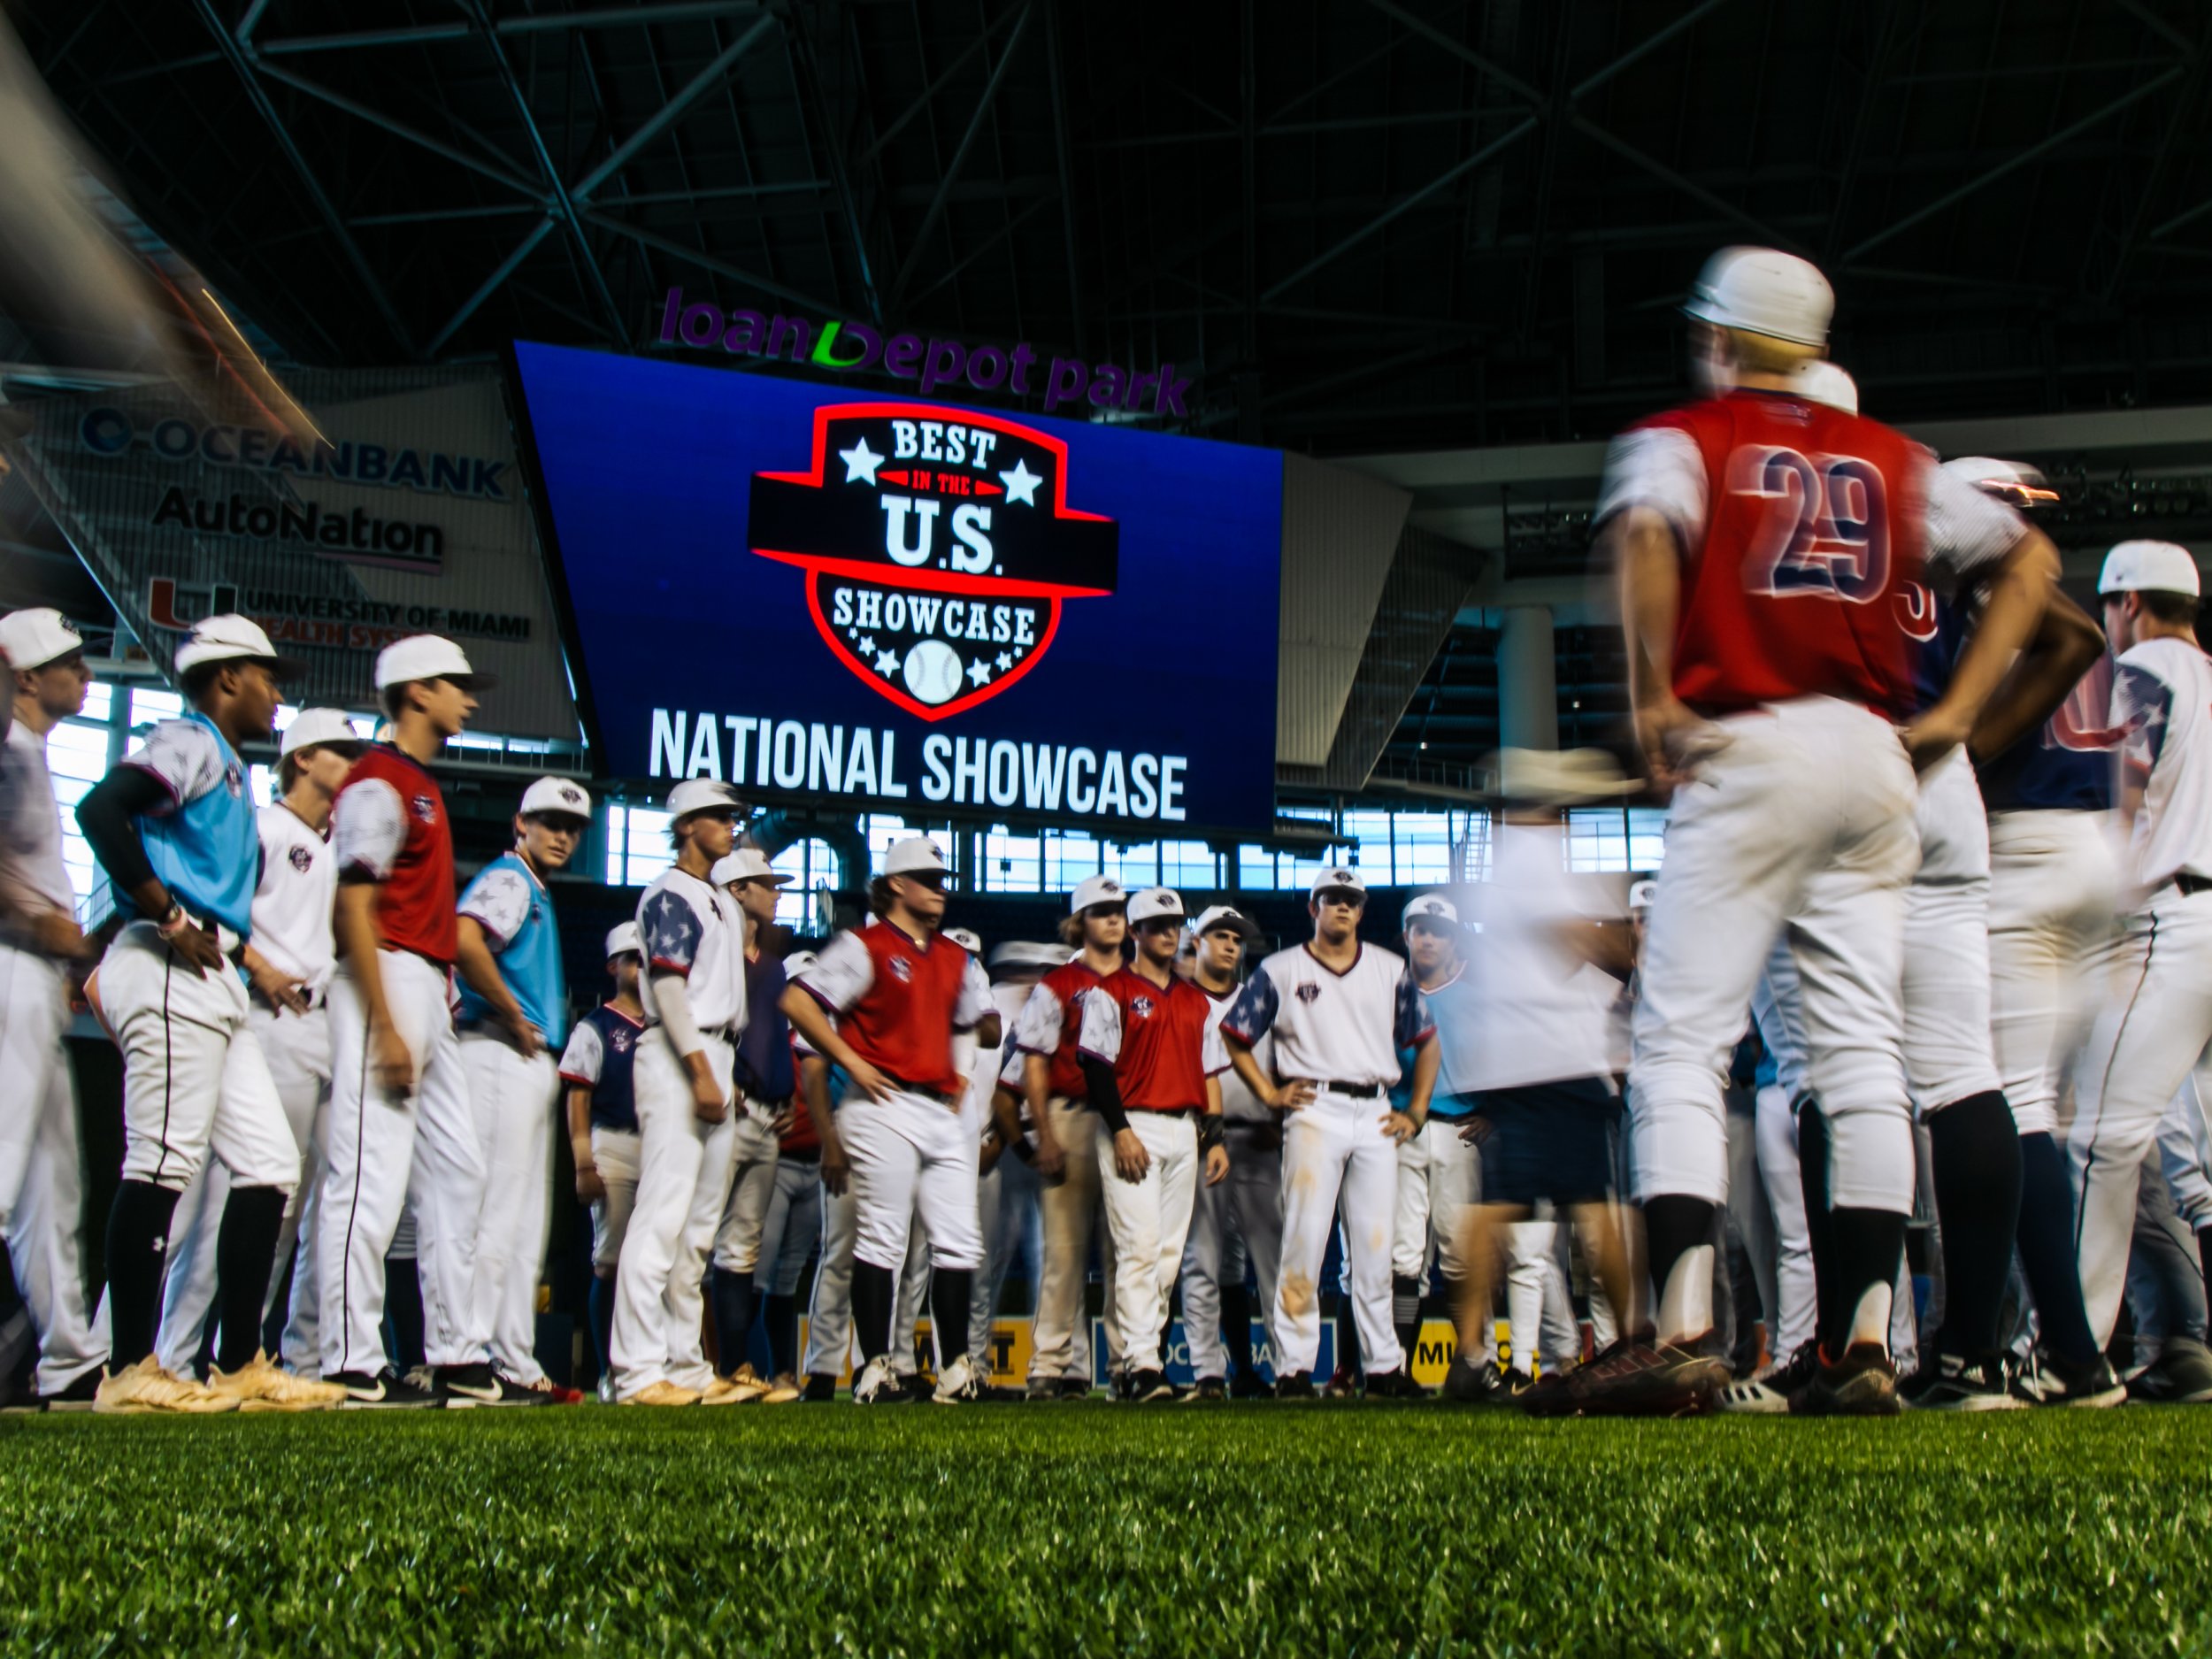 Southeast Showcase — Best in the US Baseball